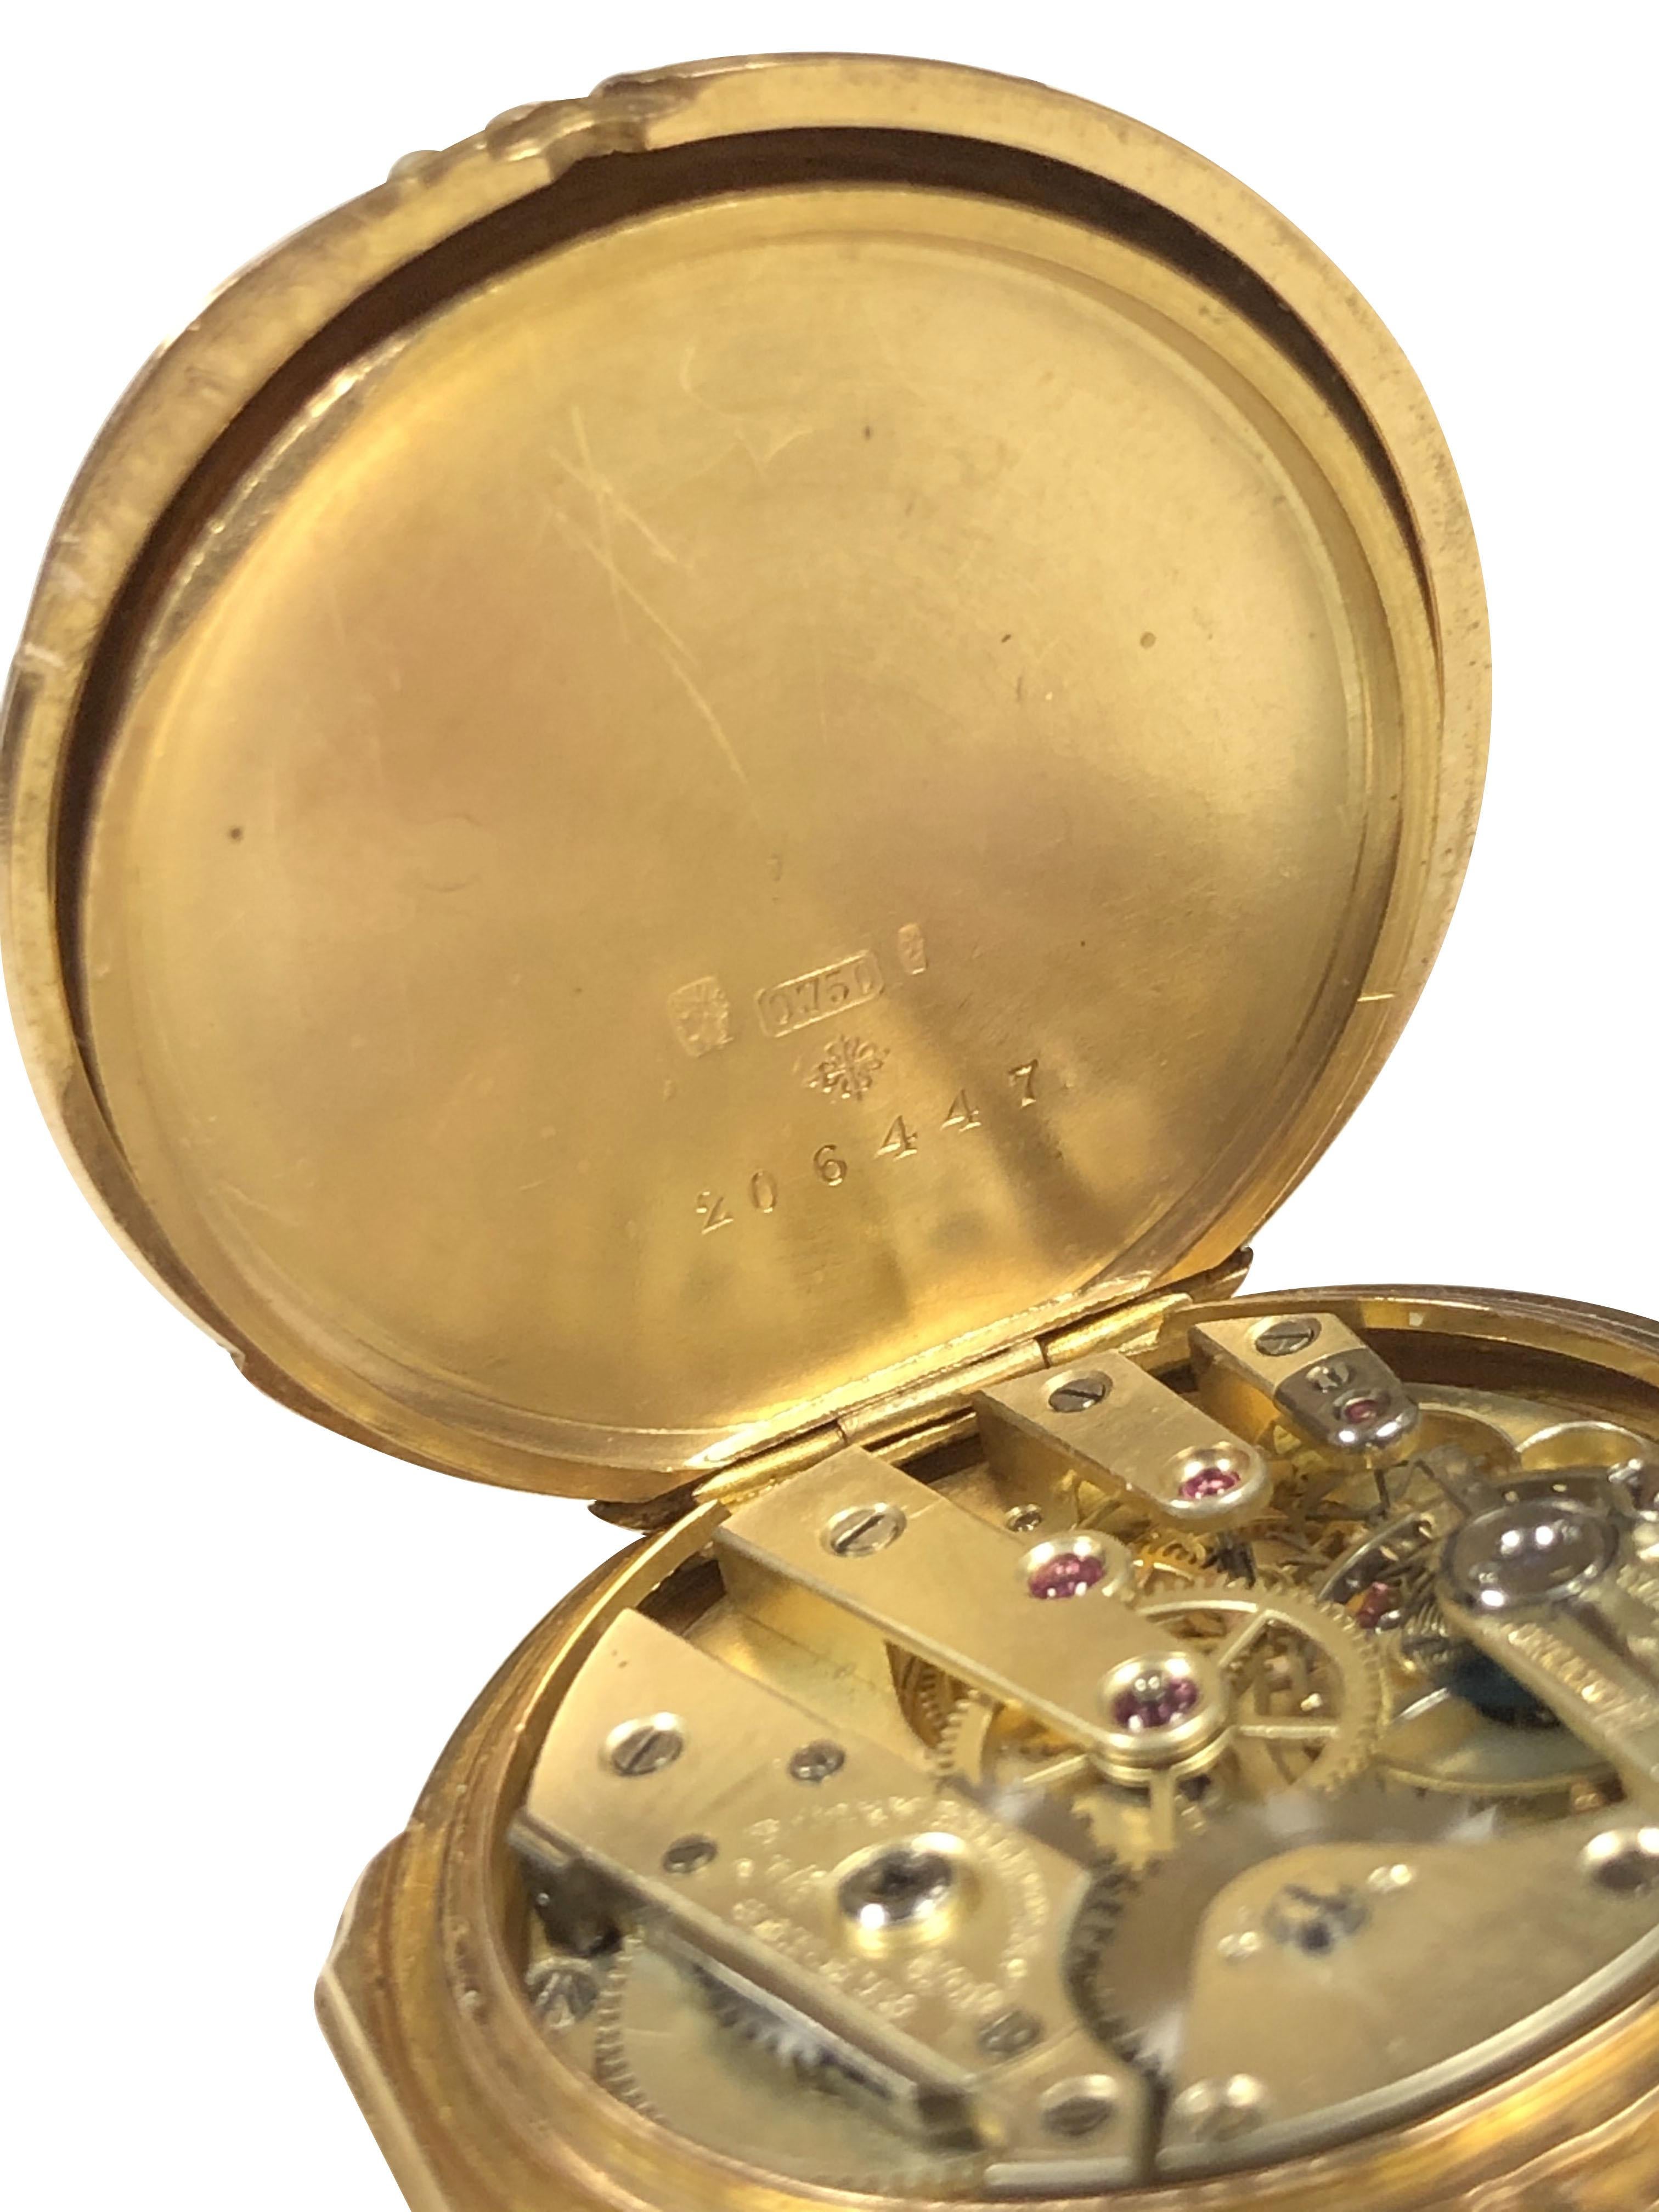 Women's Patek Philippe 1893 Gold Enamel and Pearl Presentation Pendant Watch